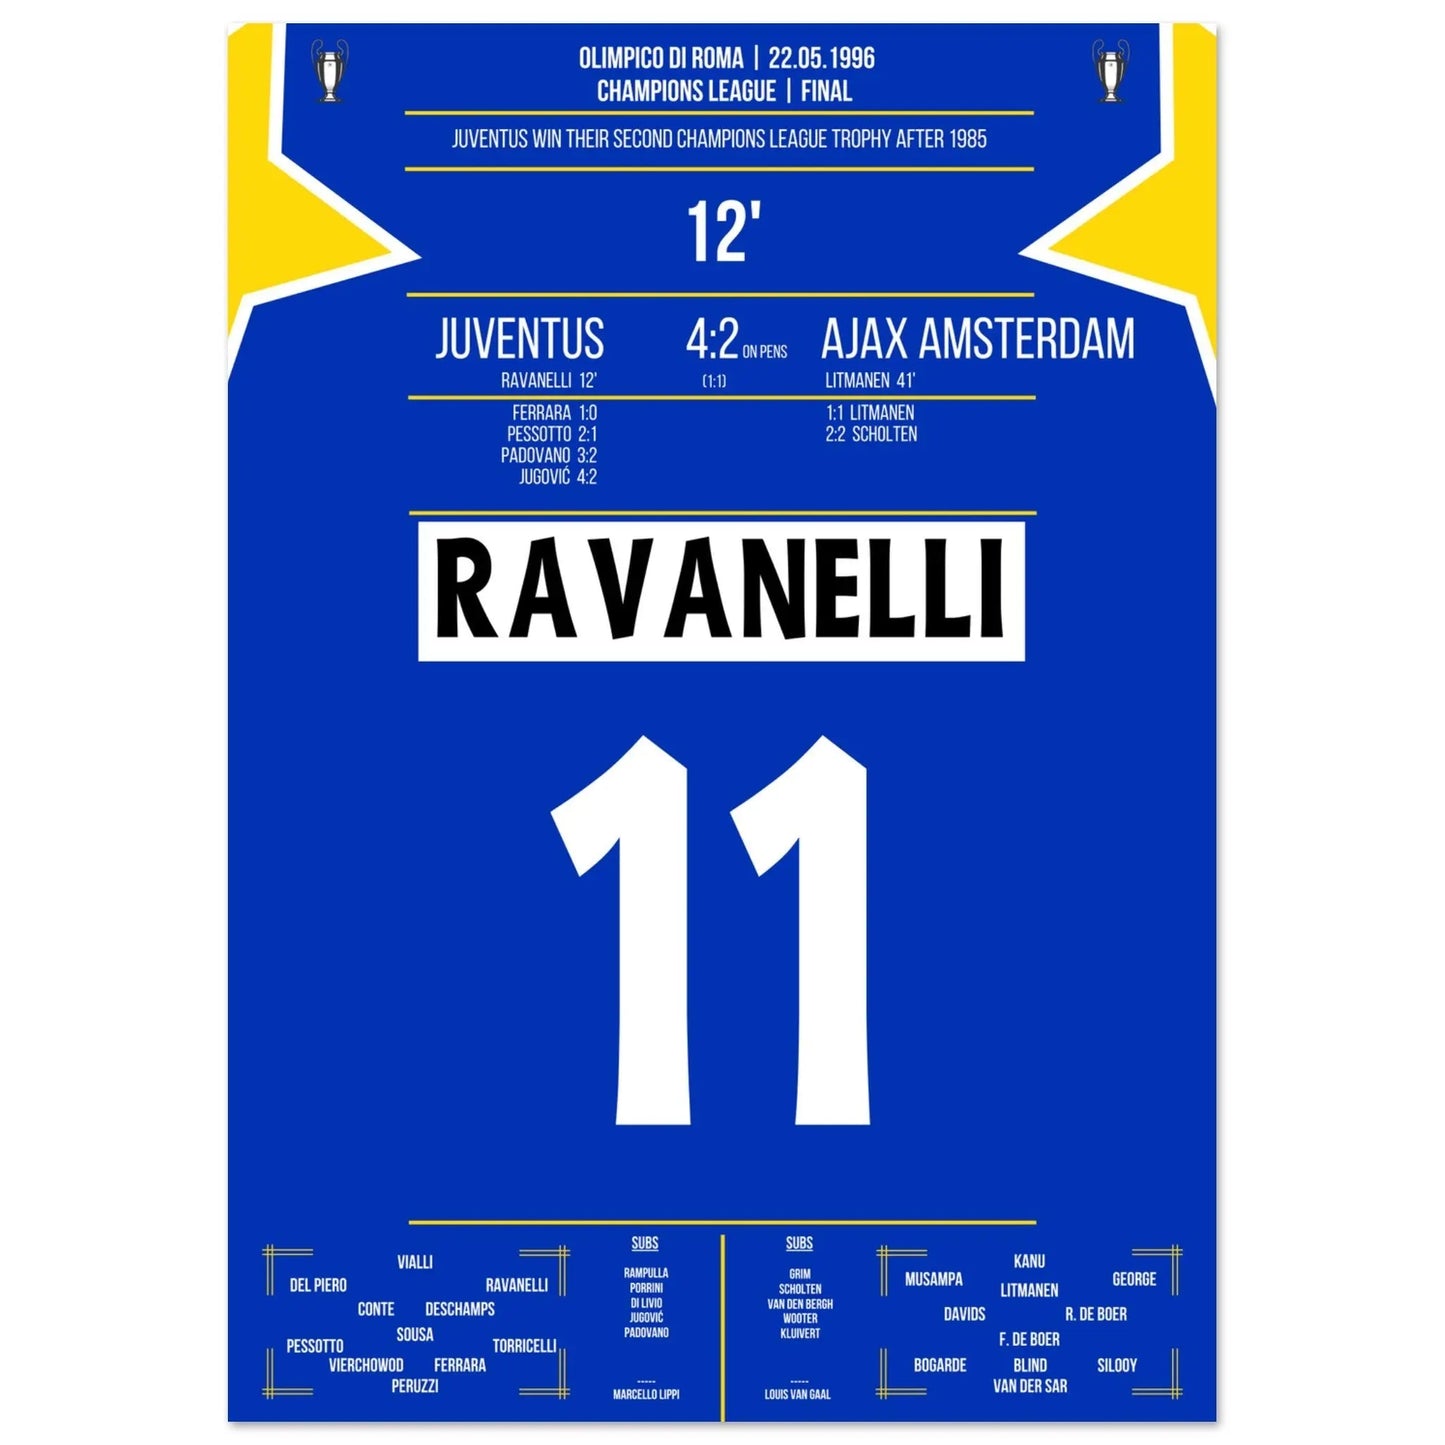 Ravanelli's goal in the 1996 Champions League final